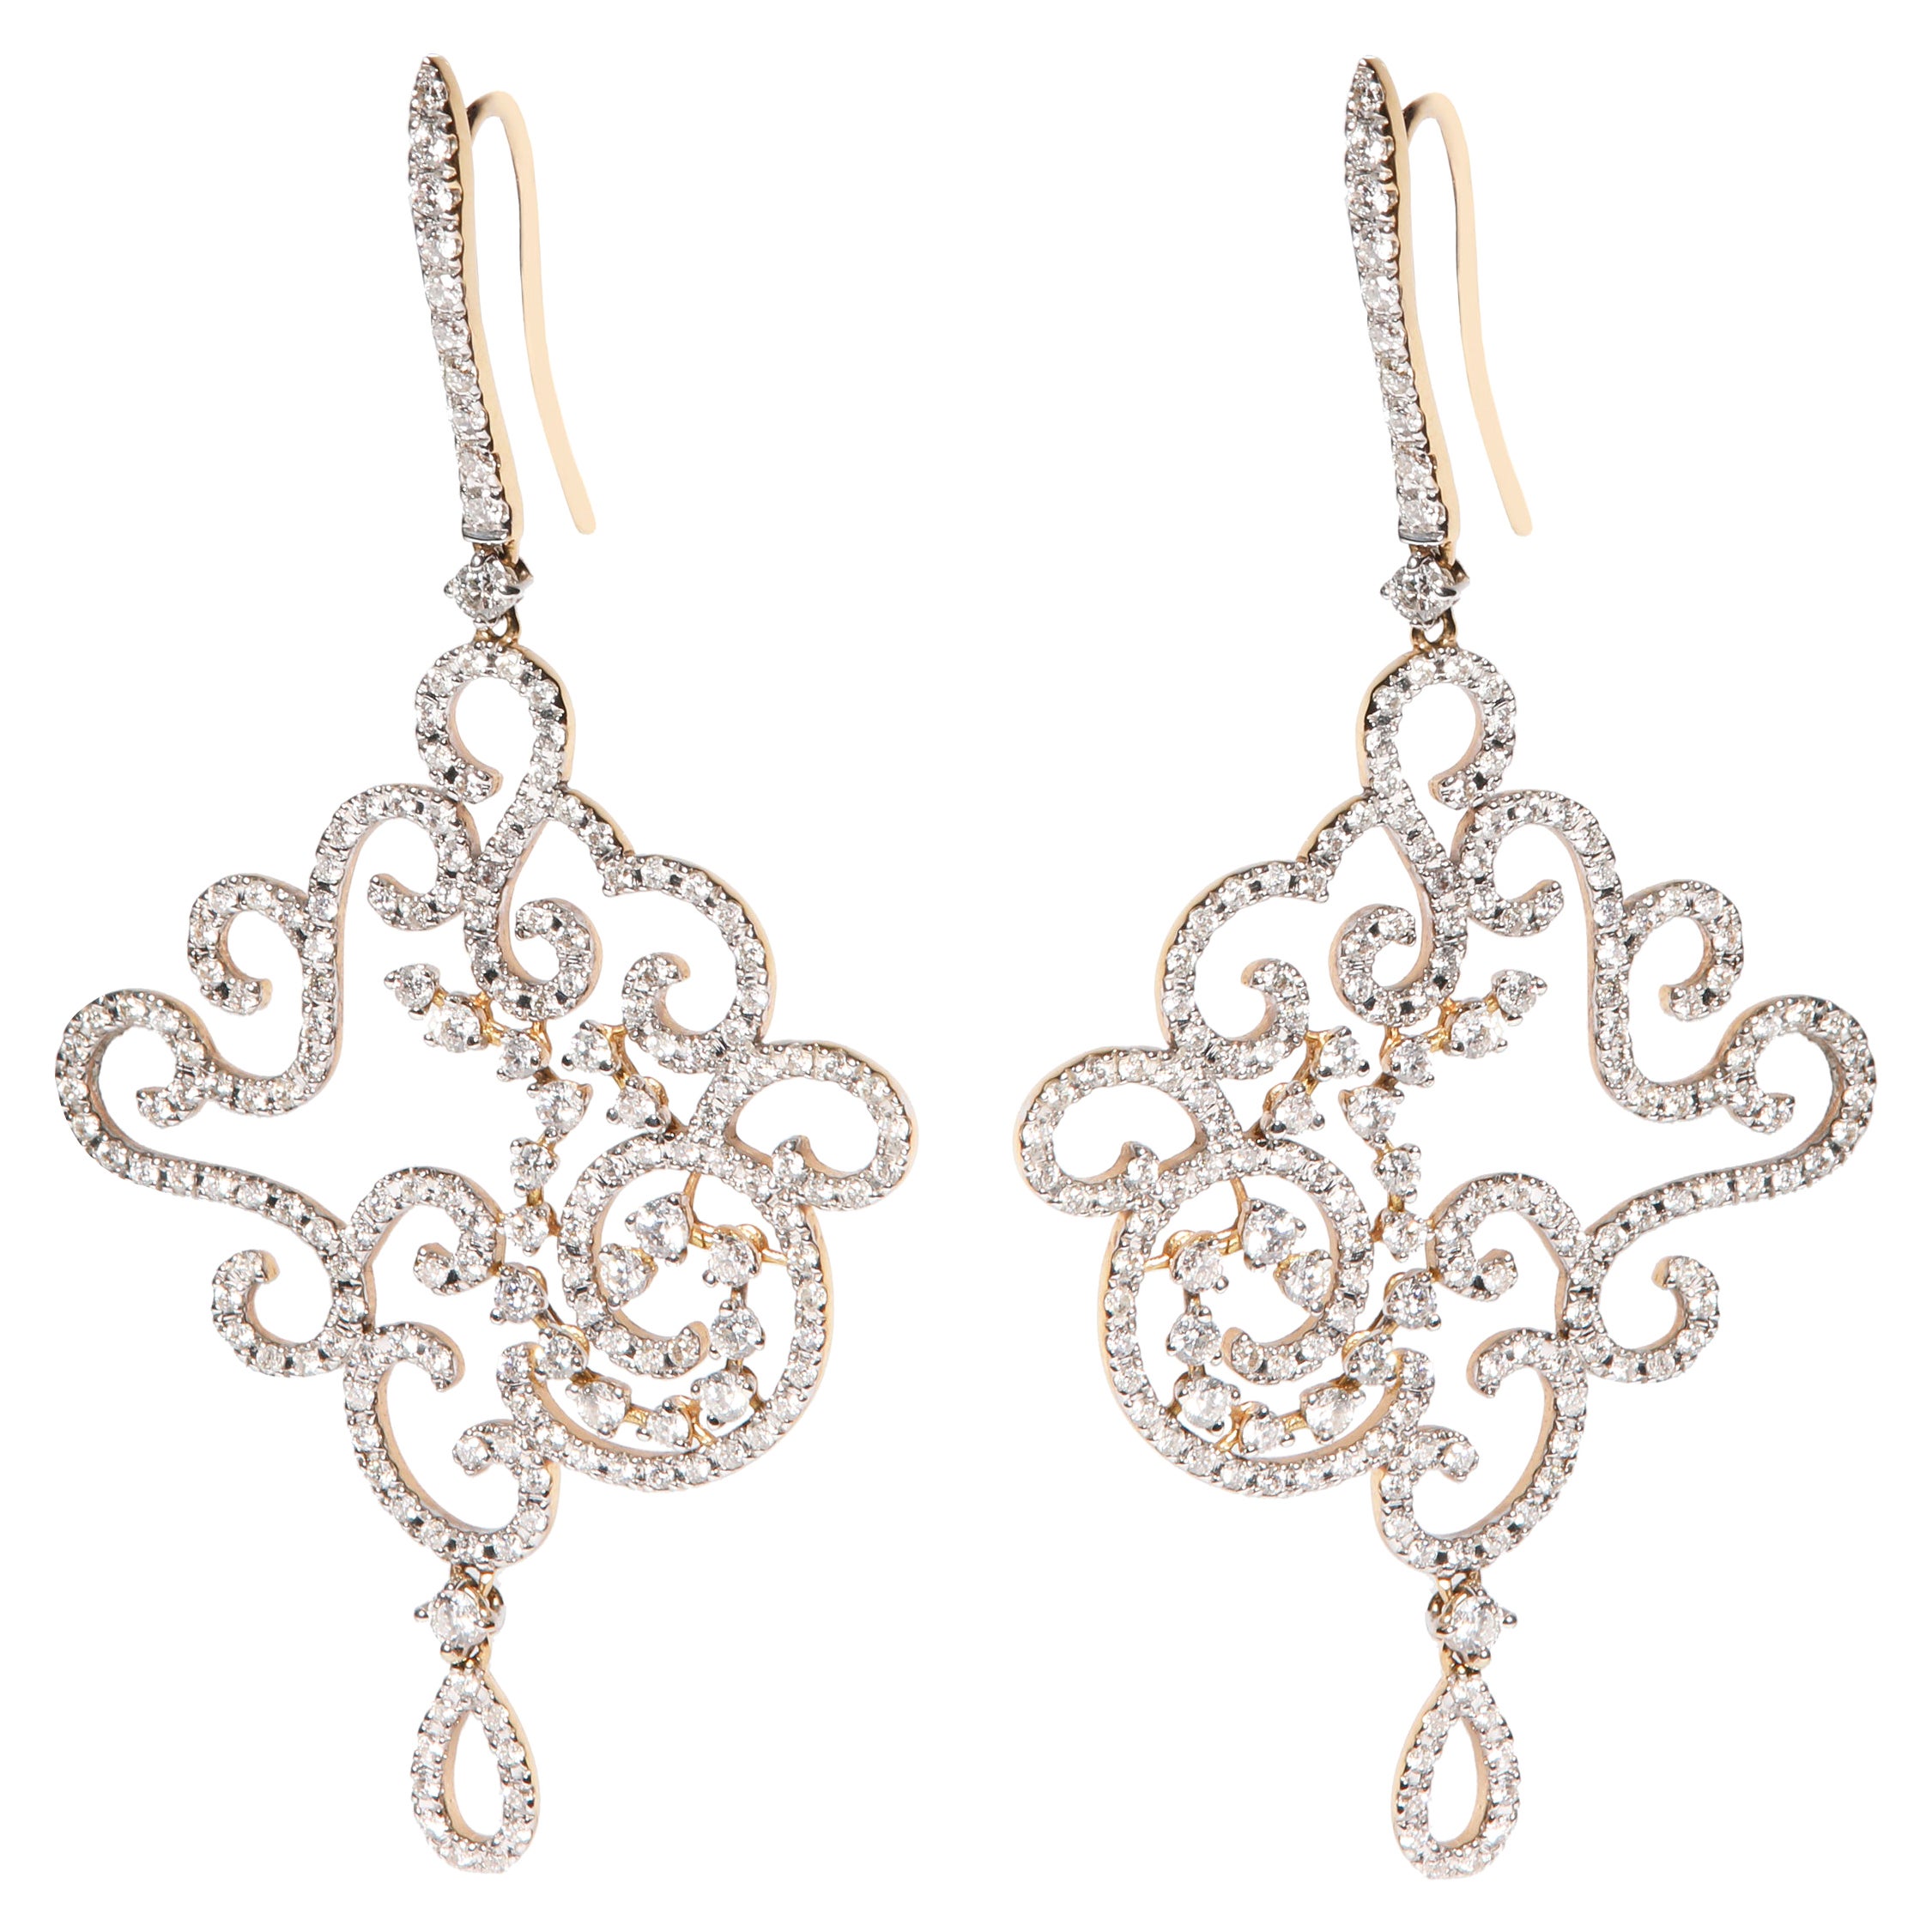 Casato Gioielli 18 Karat Gold Lace Earrings Set with Diamonds